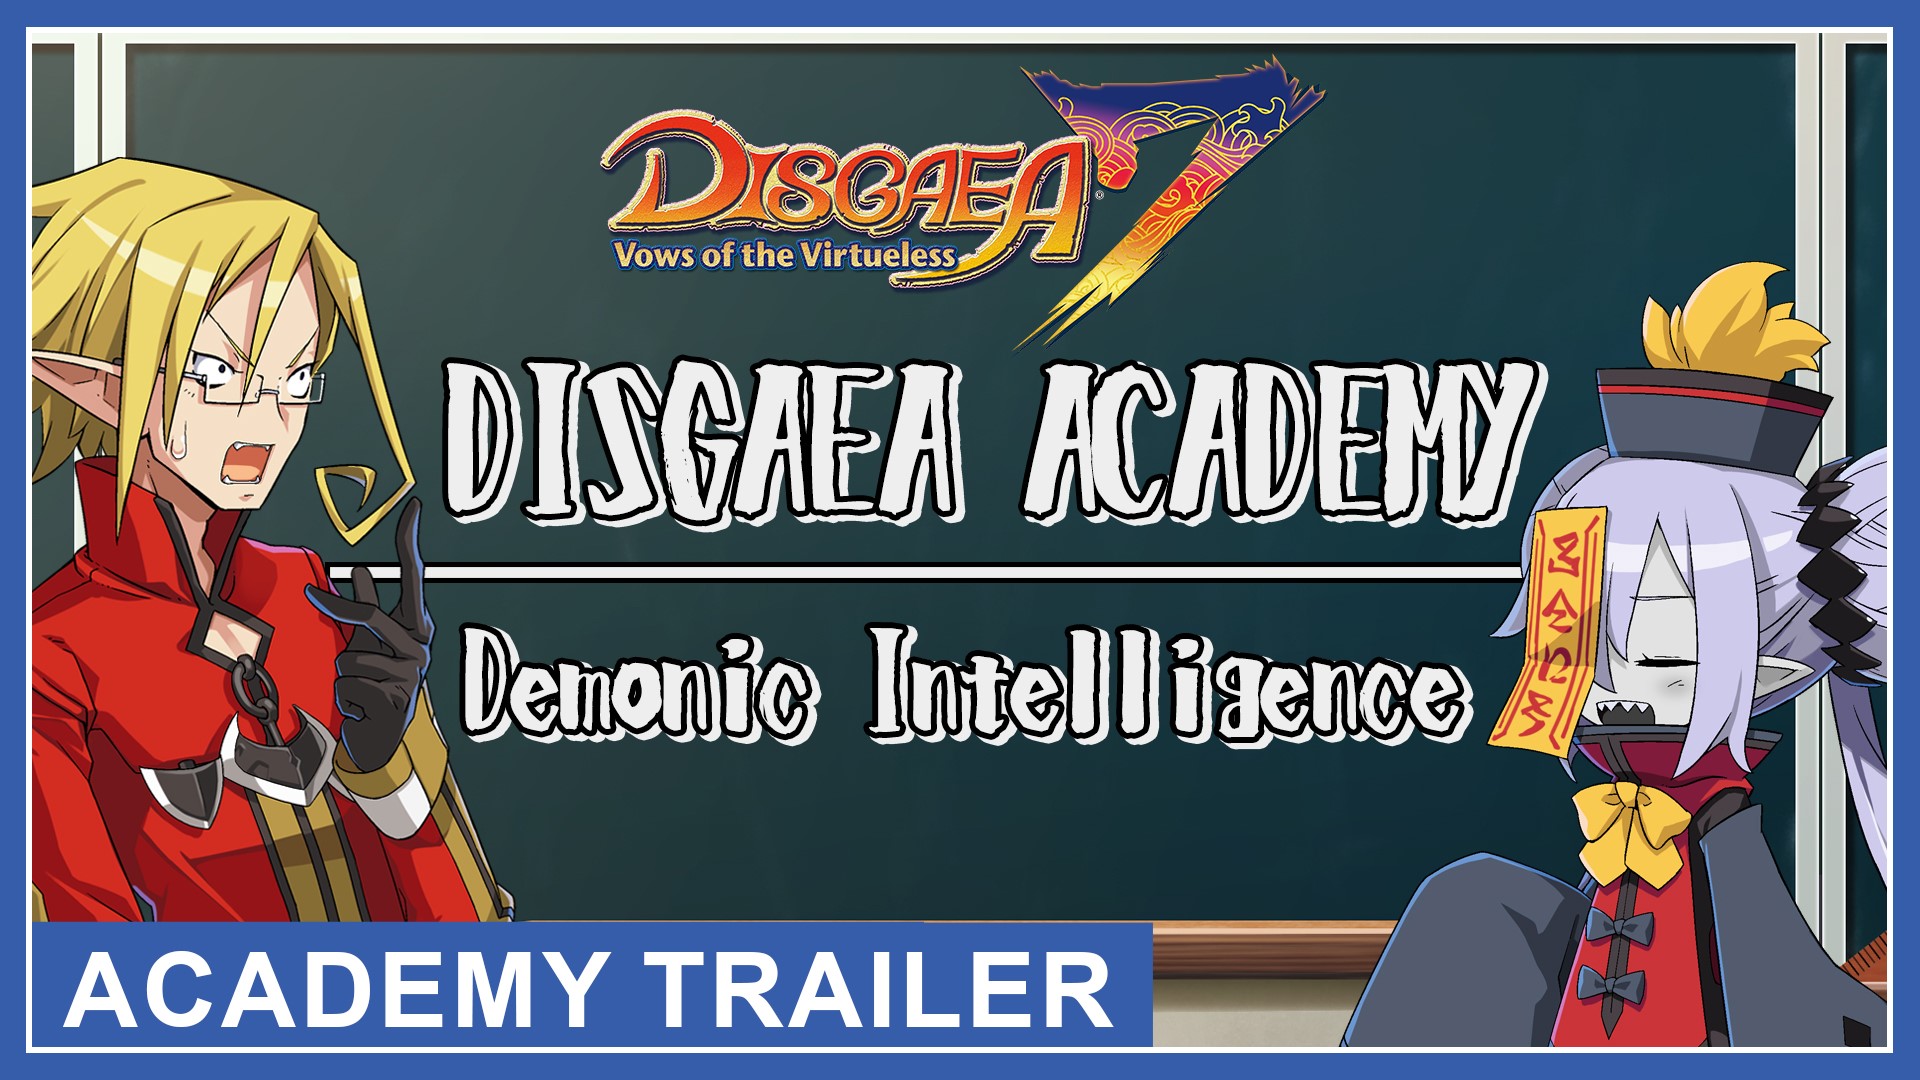 Disgaea 7 Academy Trailer: Demonic Intelligence Watch it now